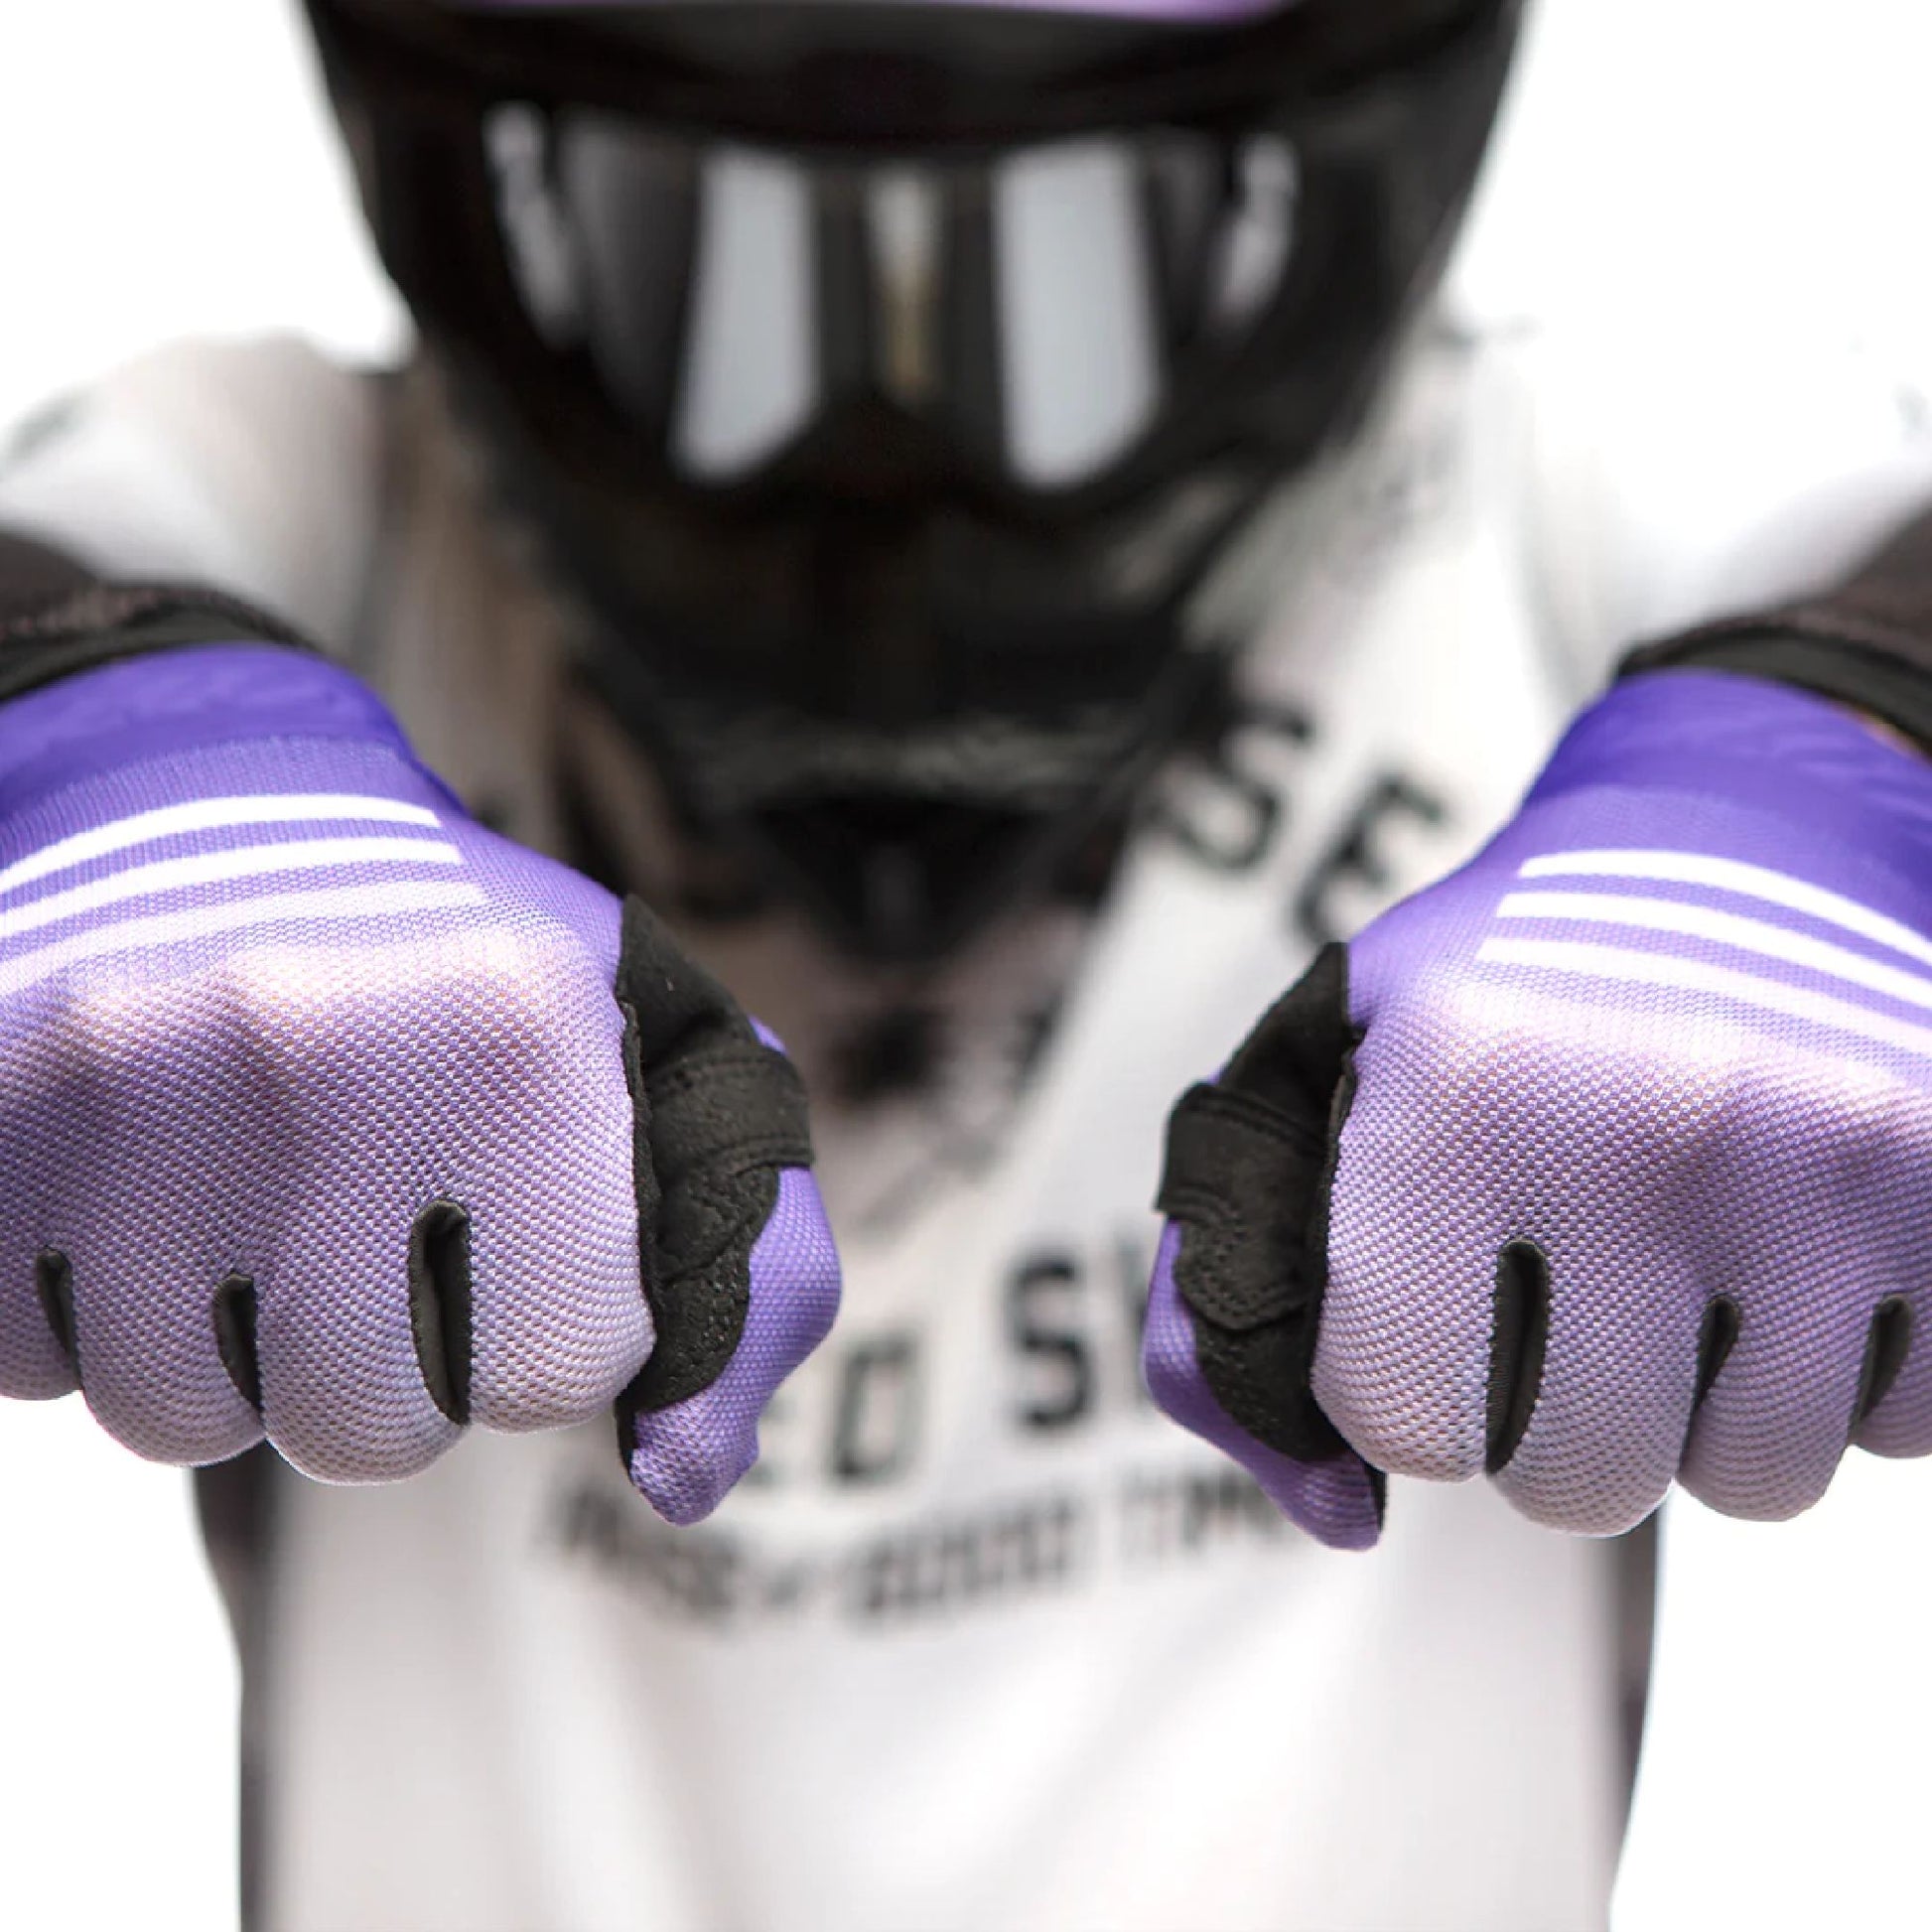 Fasthouse Blitz Fader Glove Purple White Bike Gloves